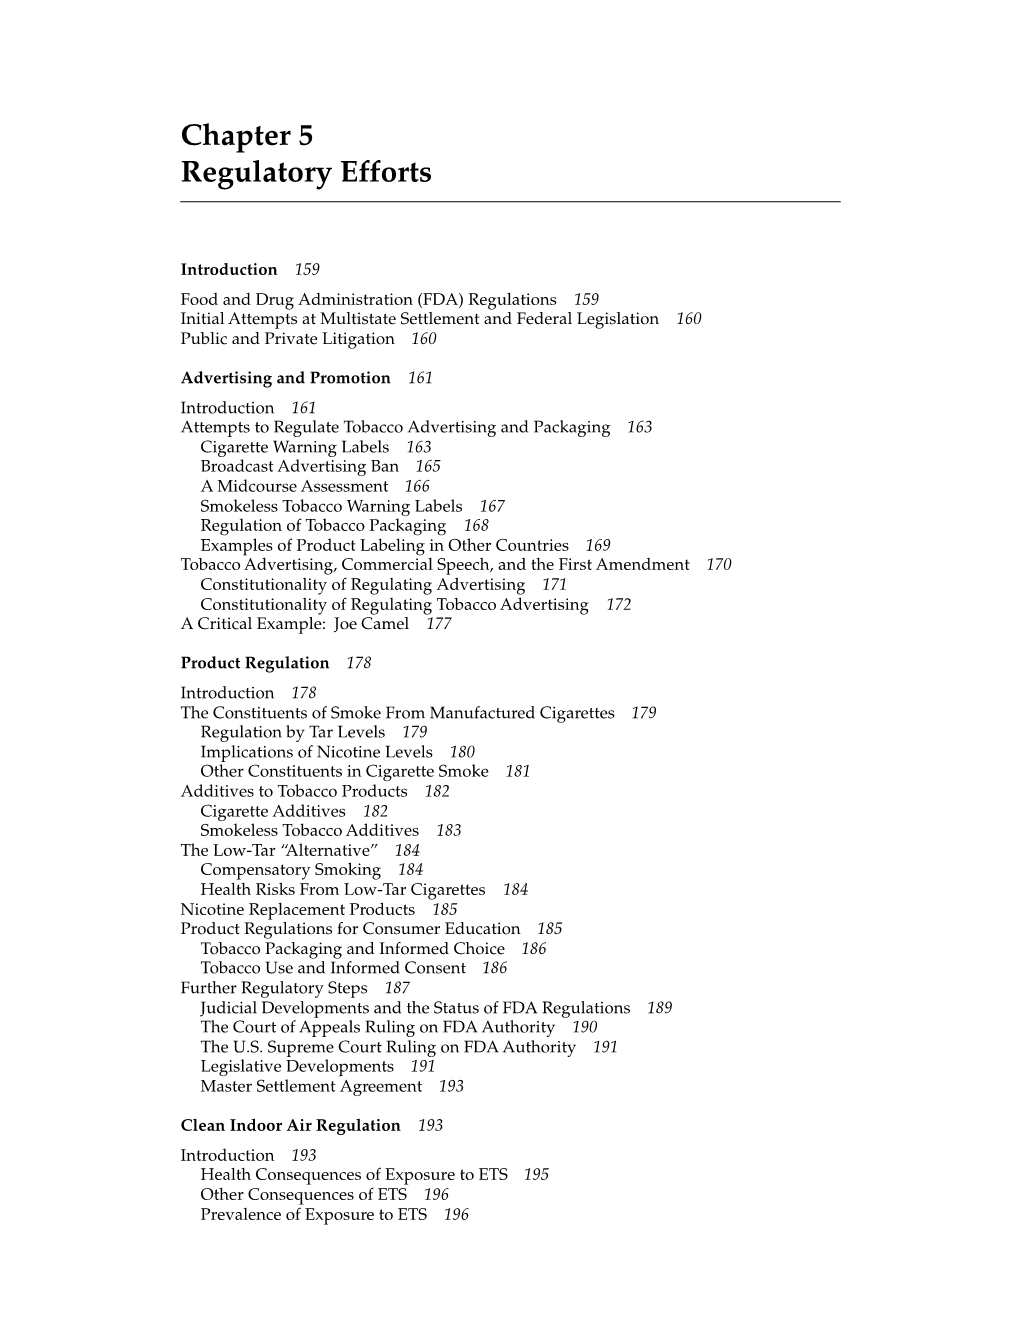 Chapter 5. Regulatory Efforts